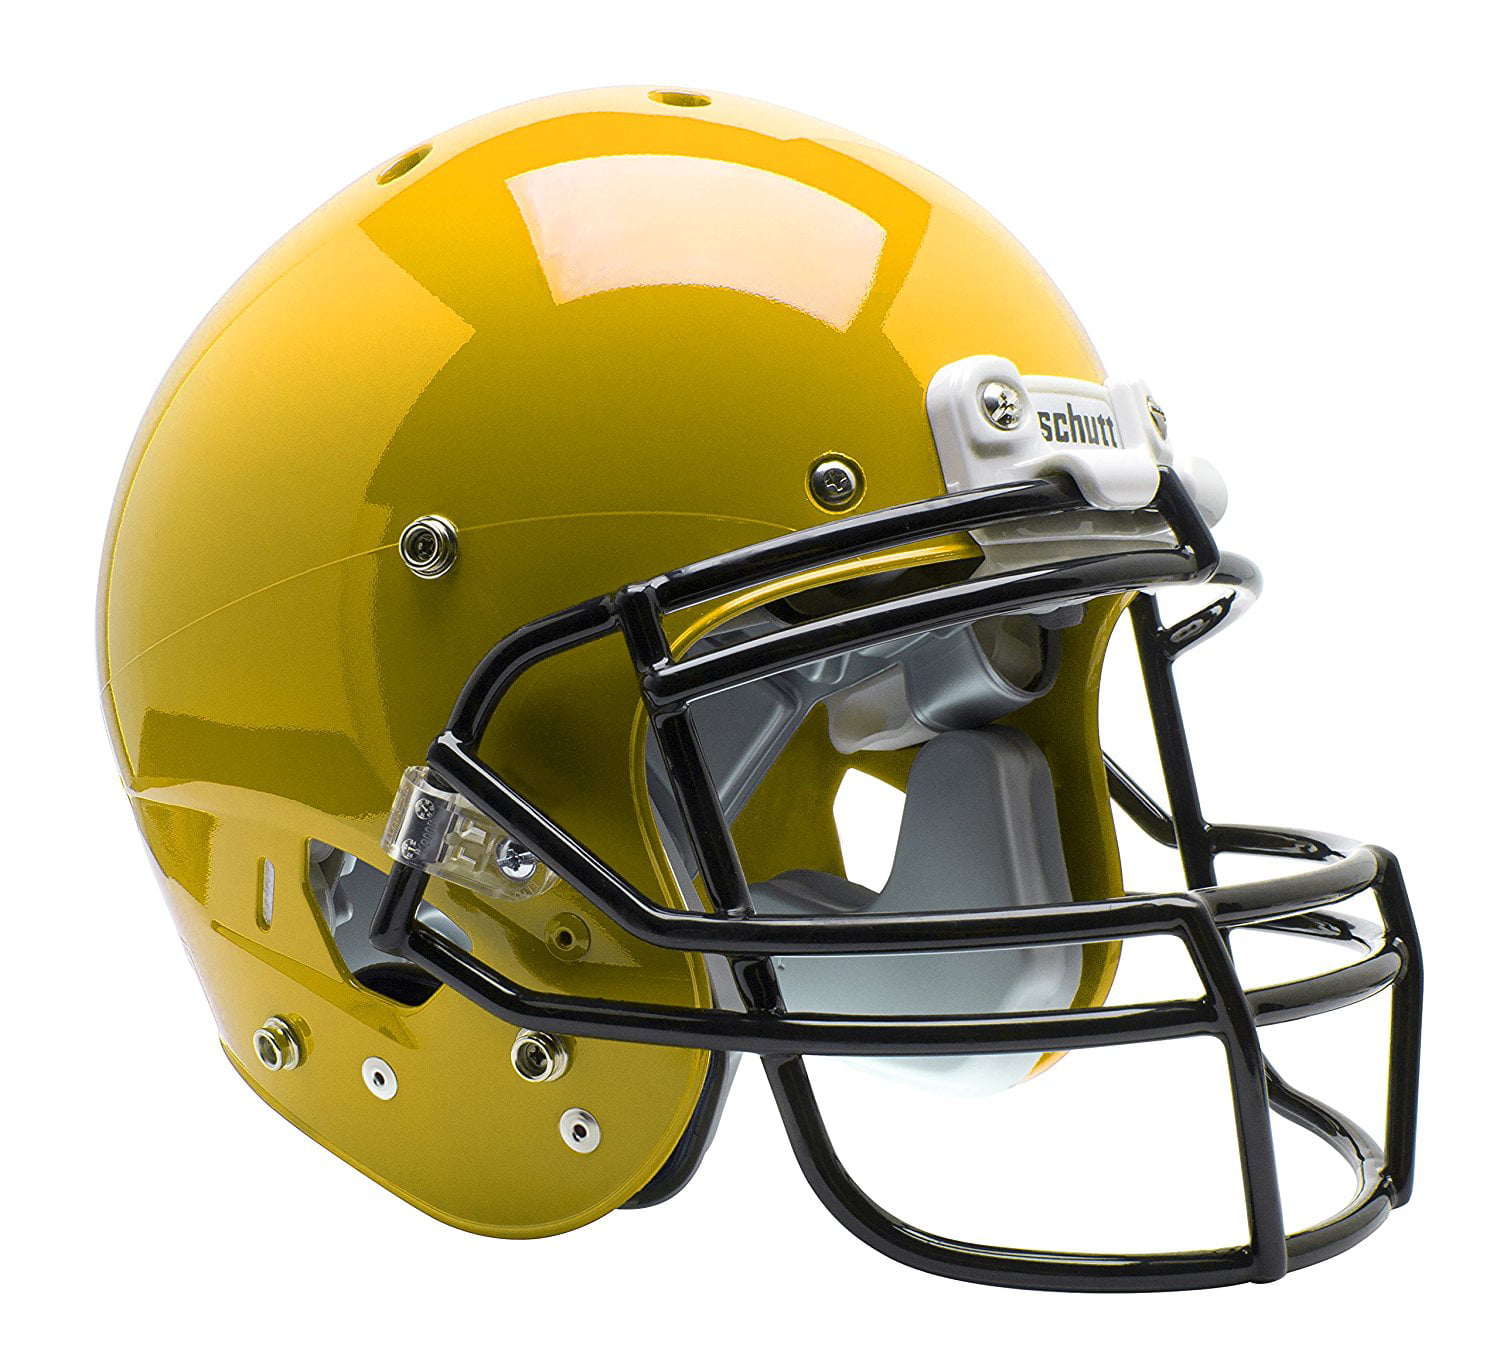 SCARLET RED Schutt AiR XP Pro VTD II Football Helmet ADULT LARGE w/ Facemask 